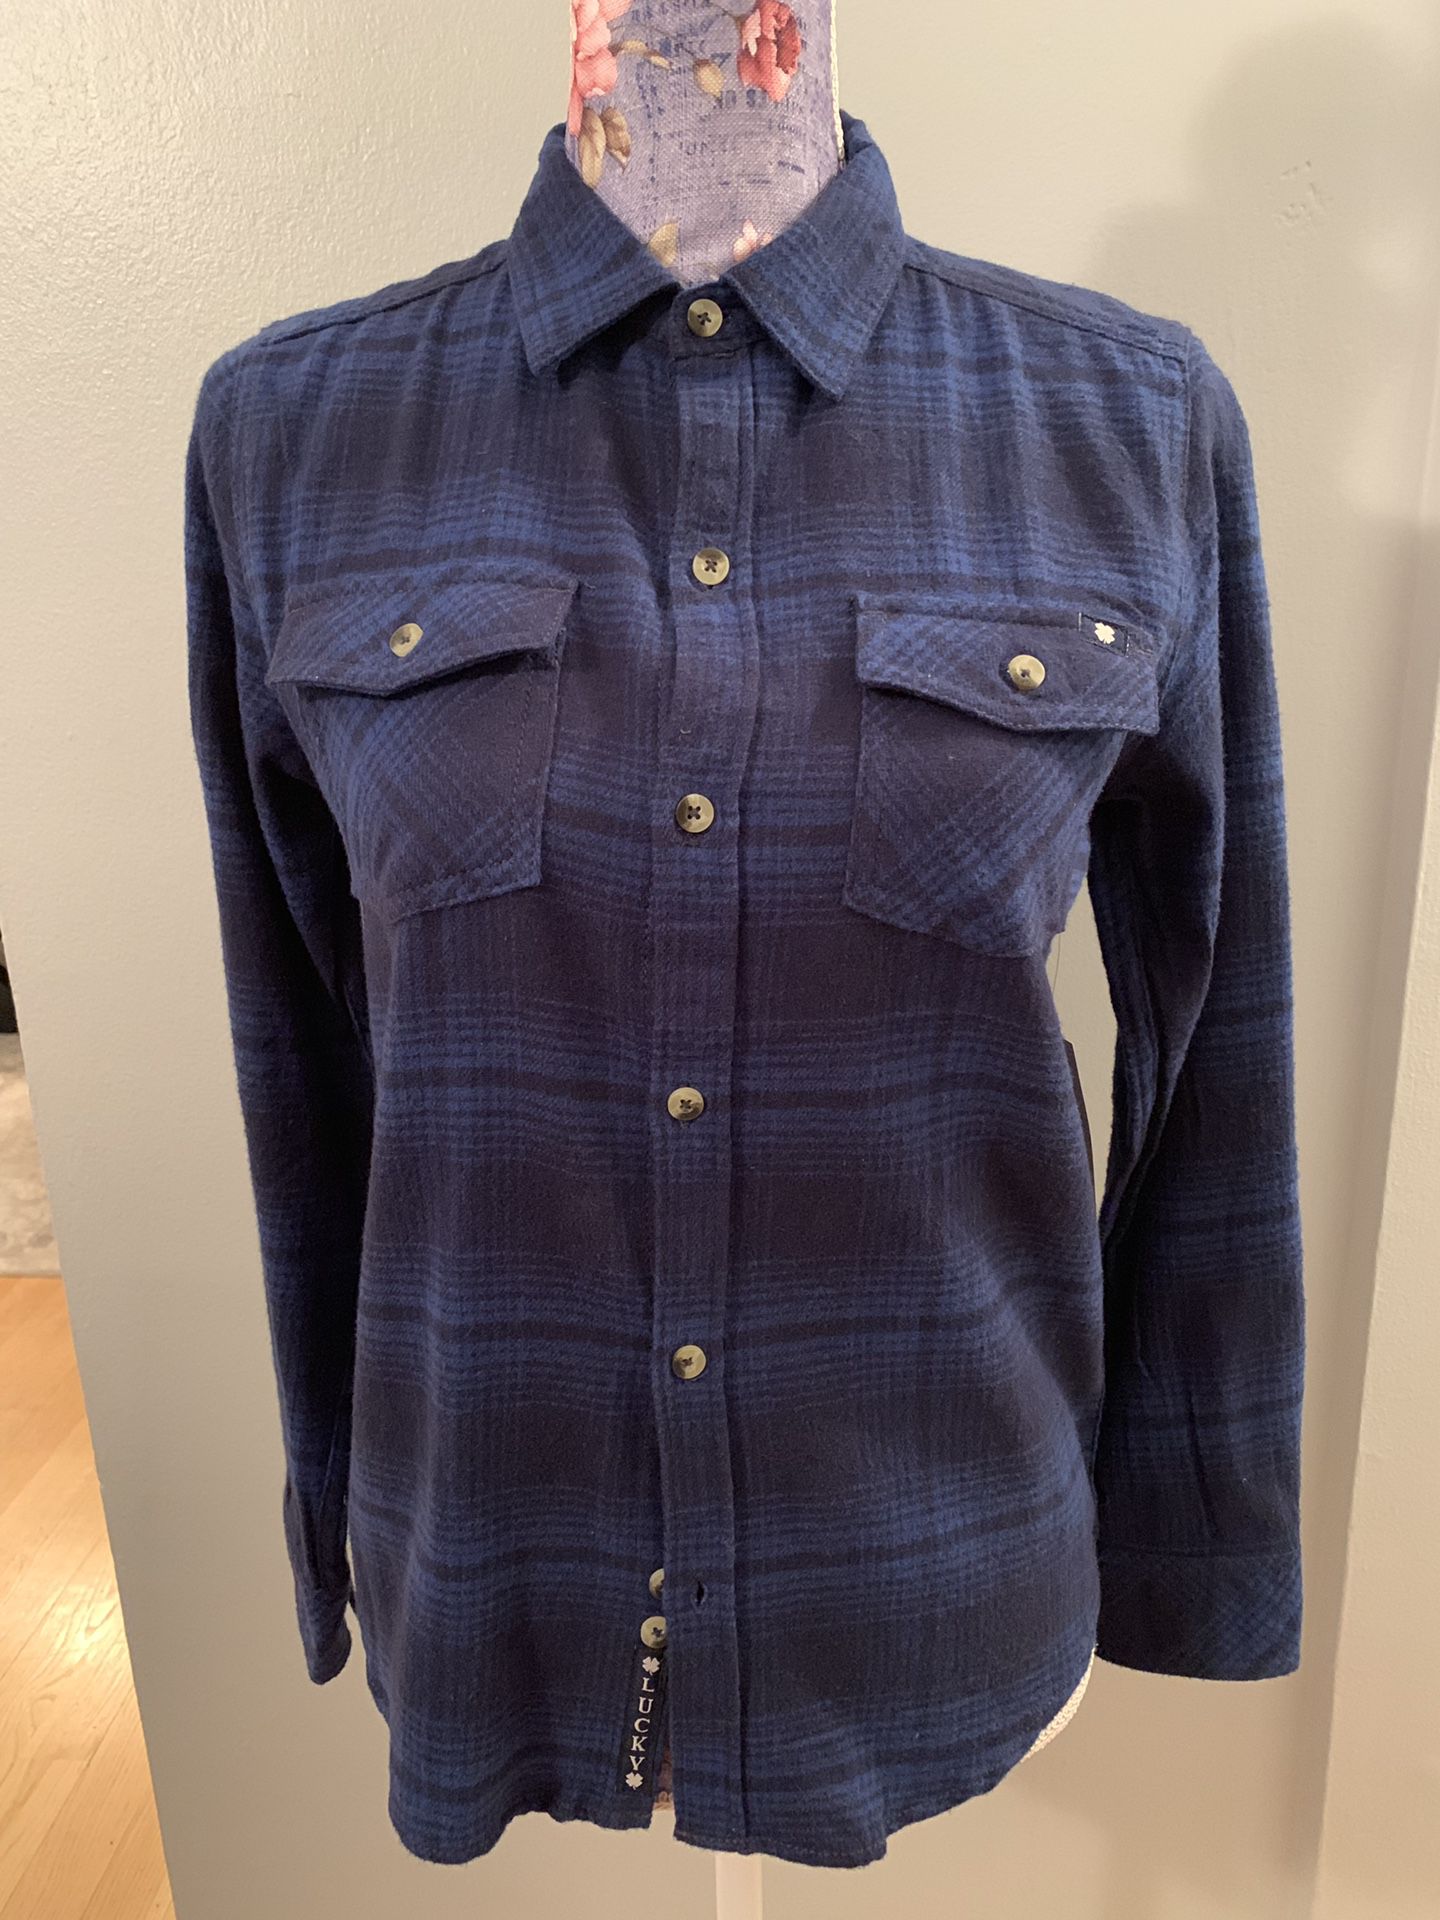 NWT Women's Lucky Brand Blue/Black Plaid Long Sleeve Flannel Button Down Shirt - Size M